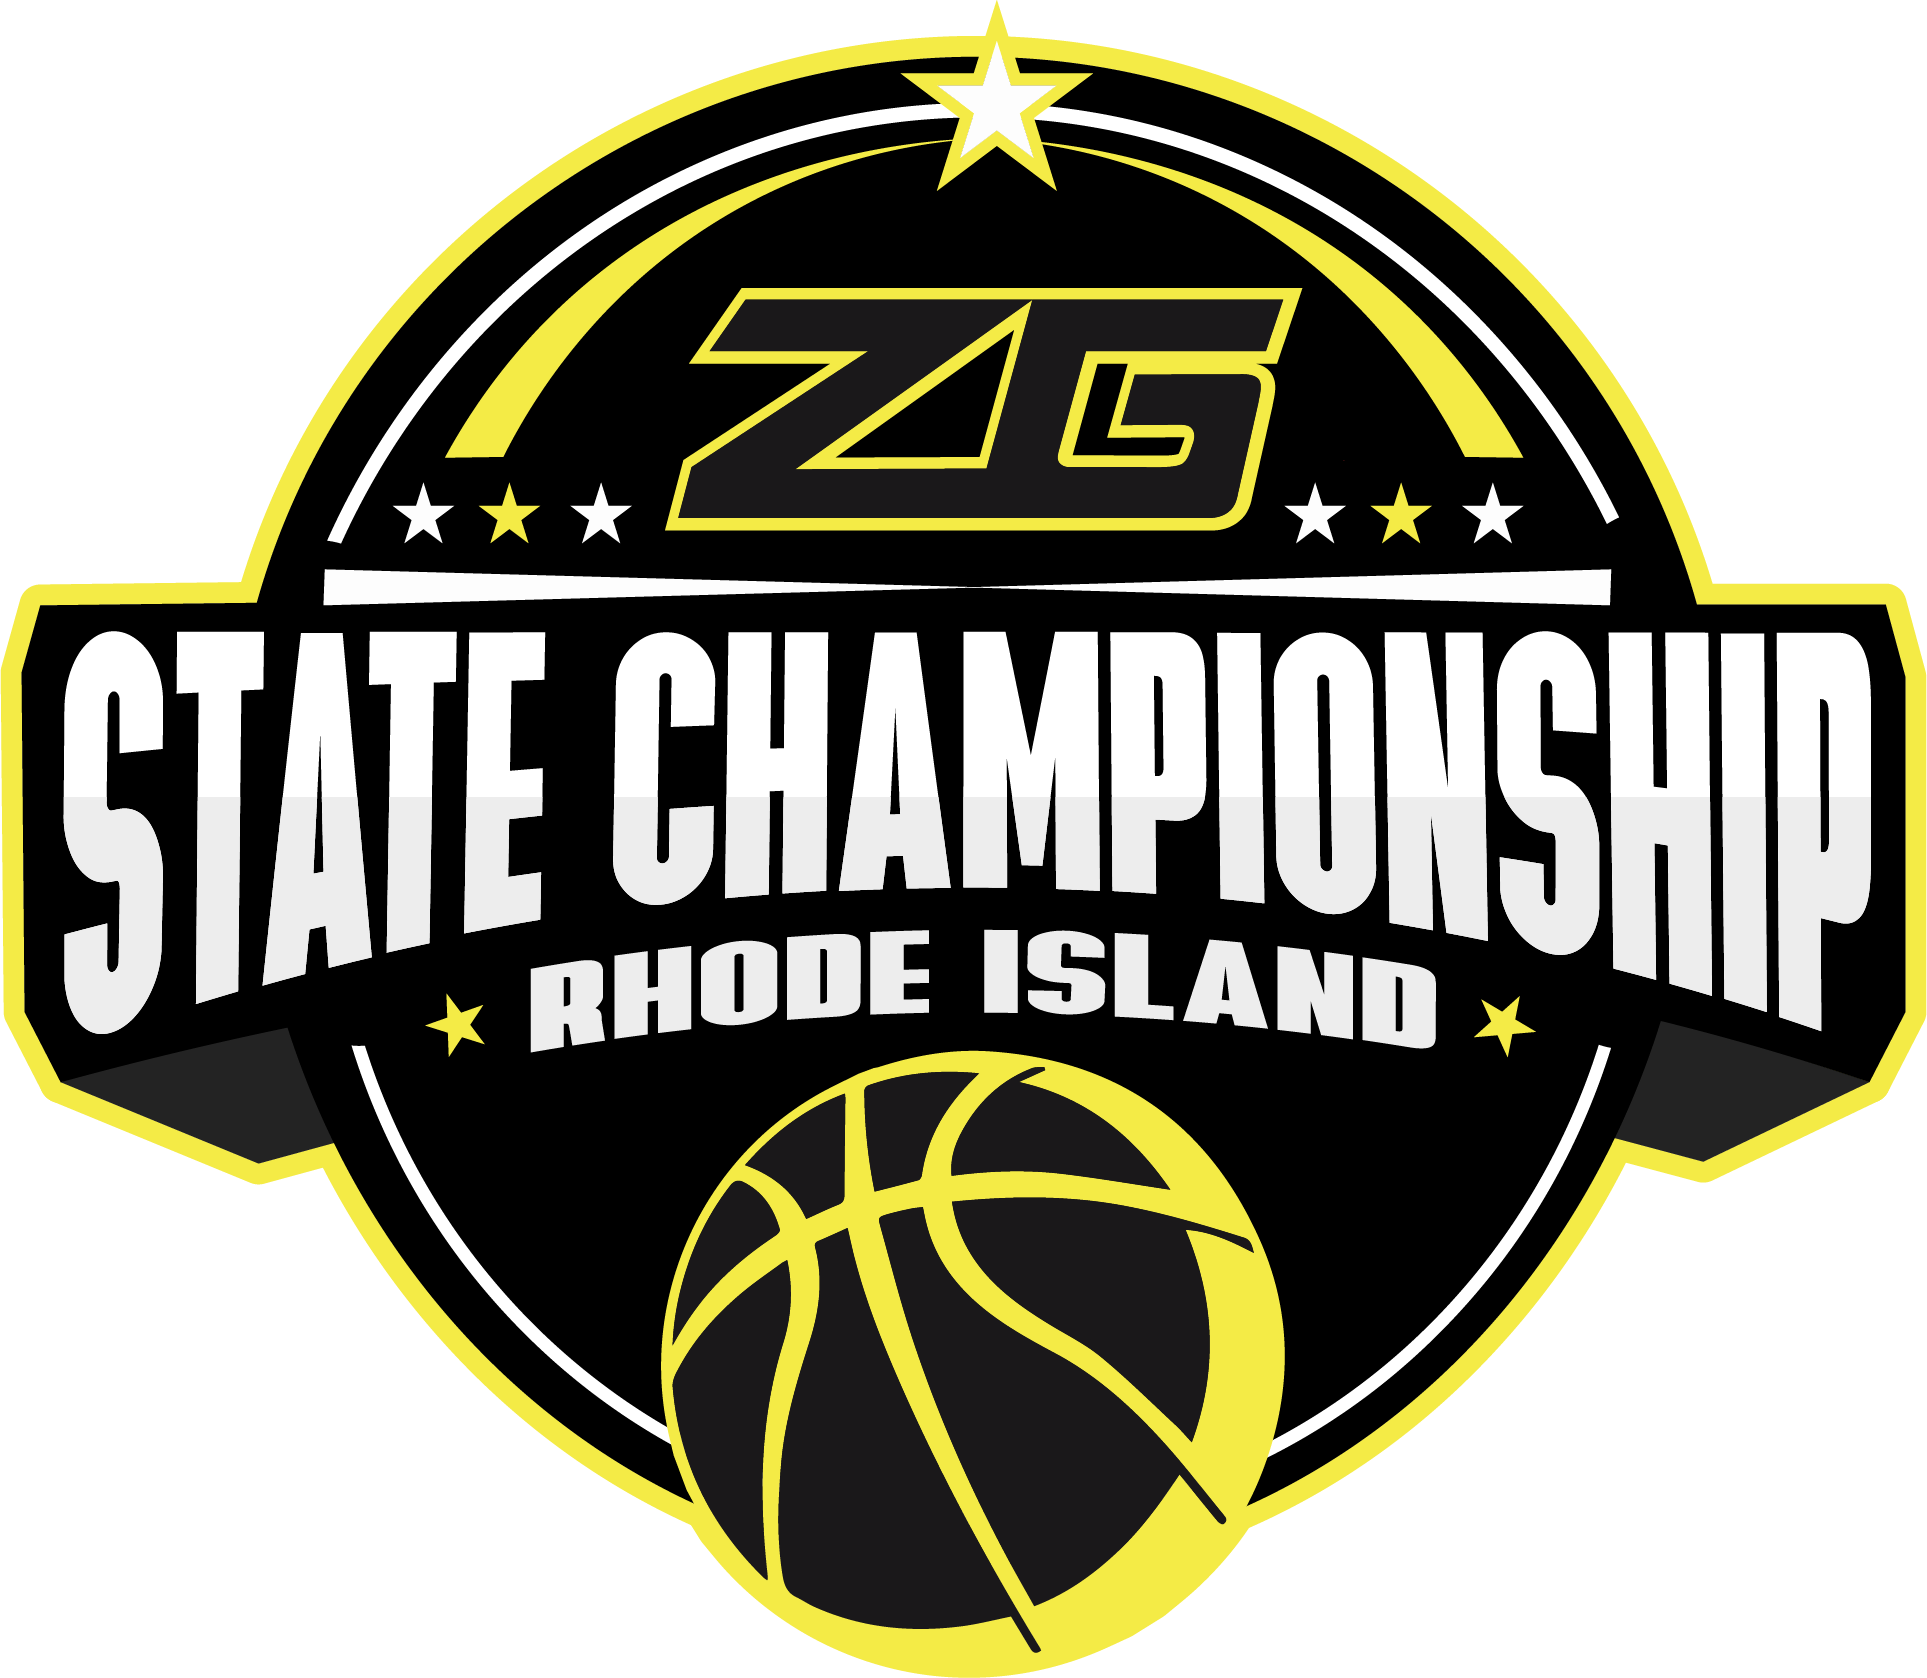 ZG State Championship Rhode Island